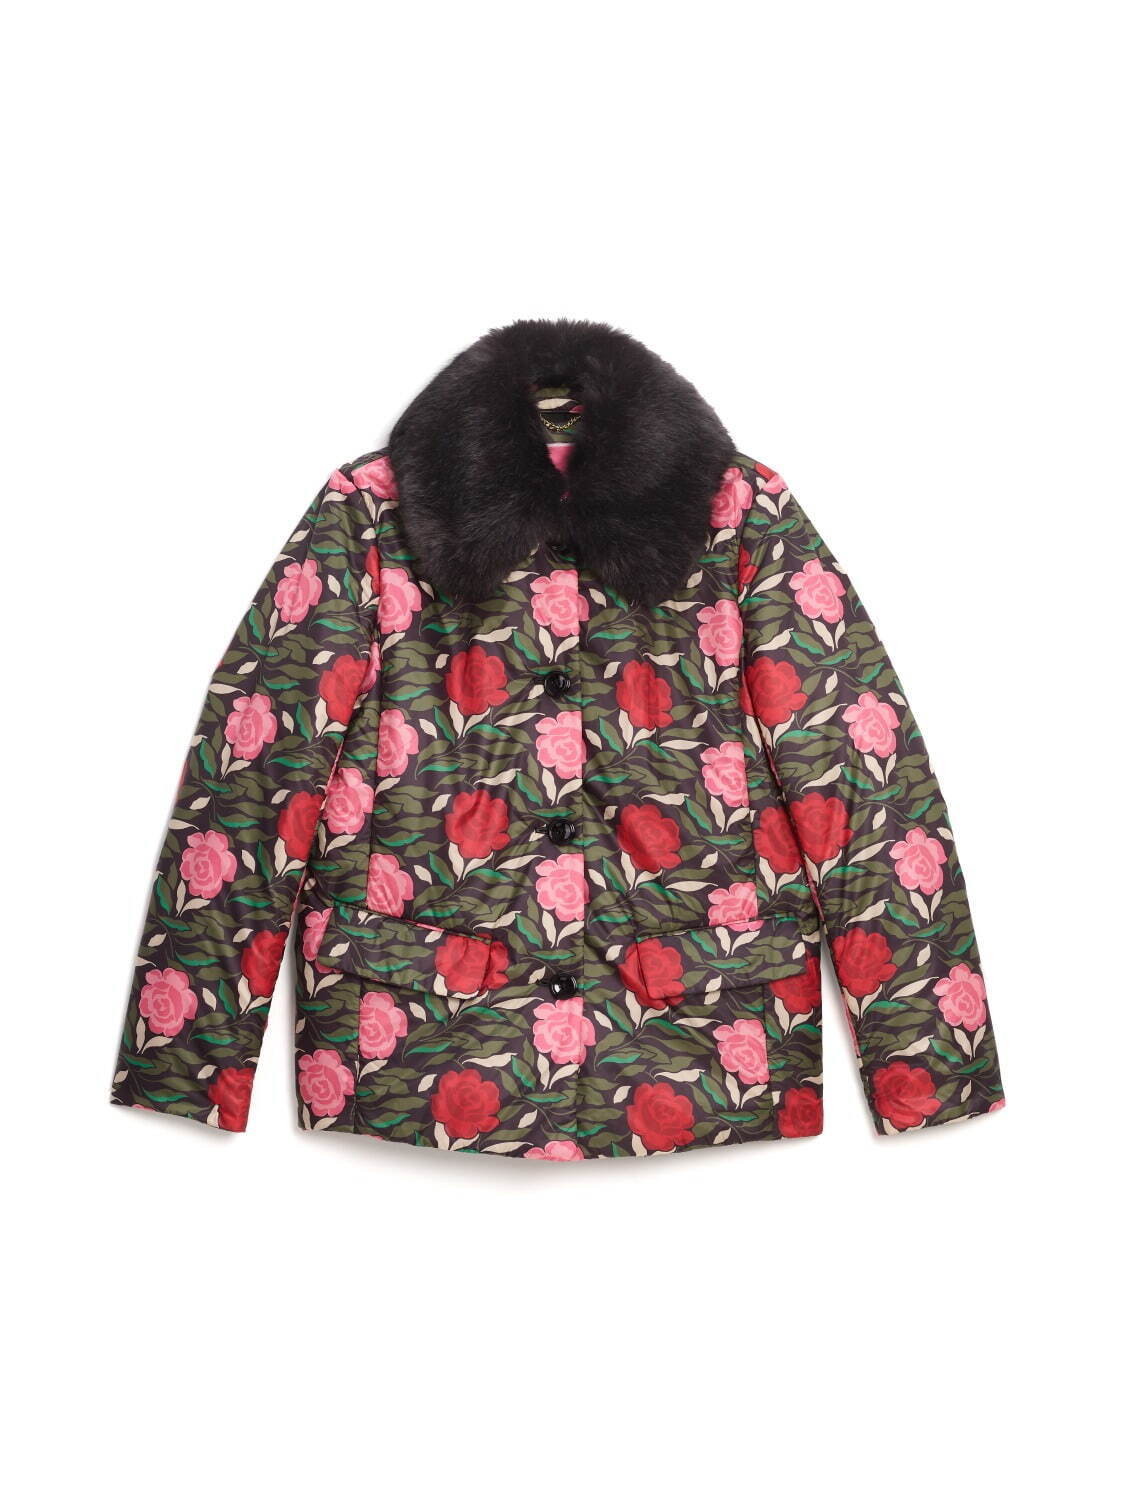 rose garden puffer jacket 52,800円
※9月末発売予定